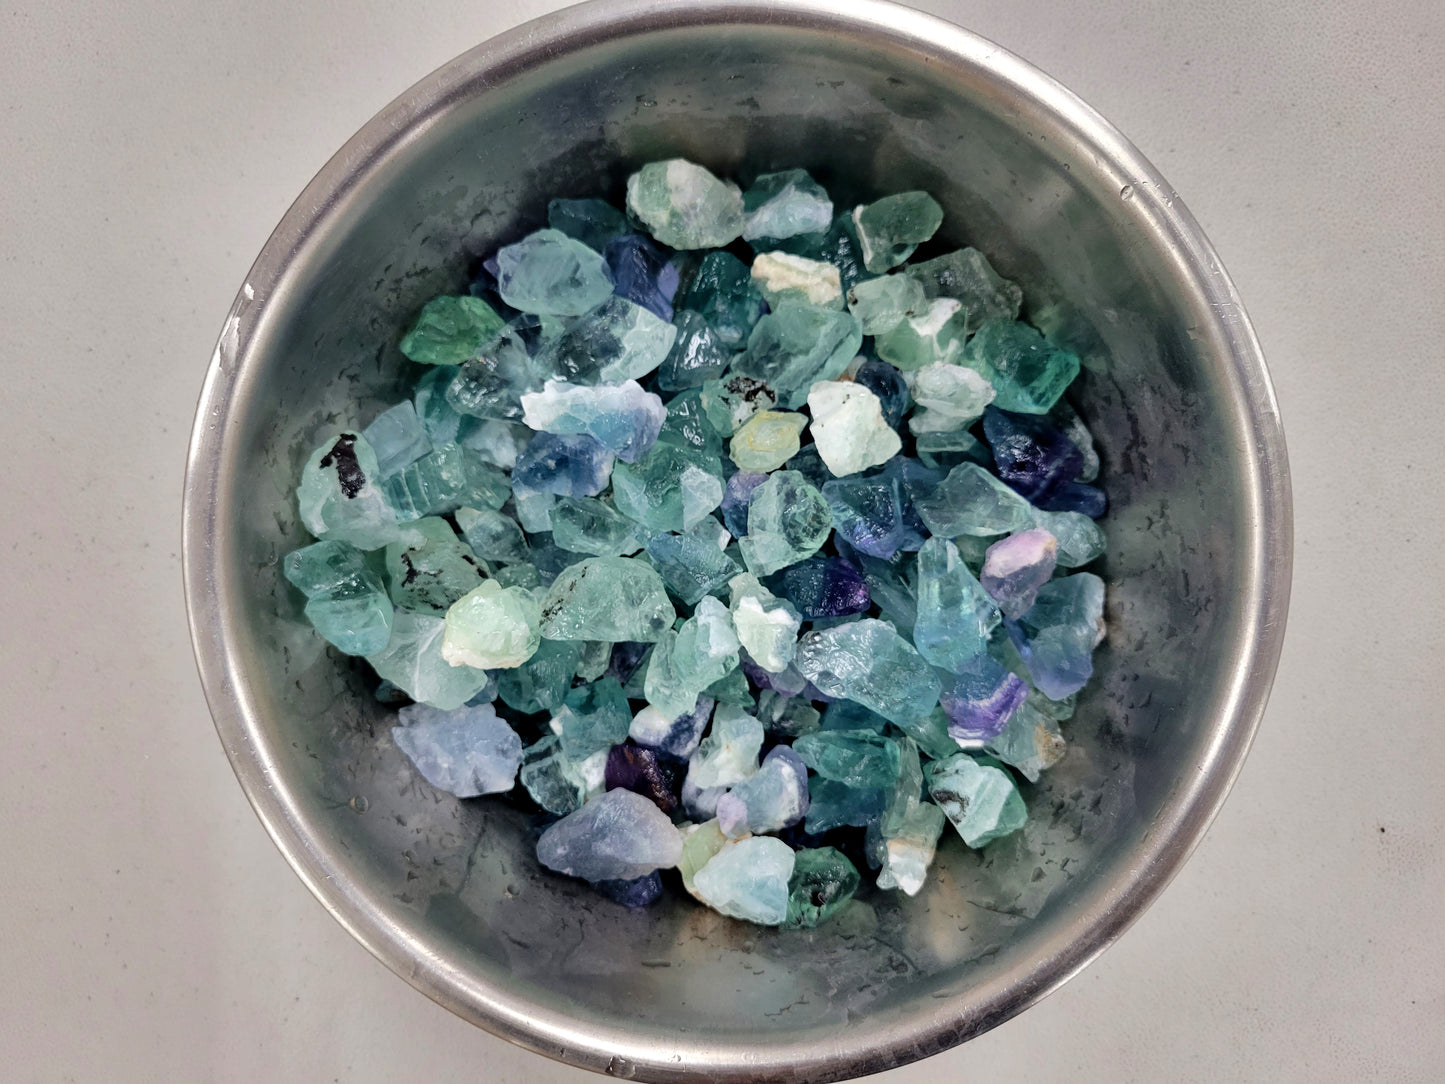 Small Fluorite Crystal Chunks - Bulk Rough Stones